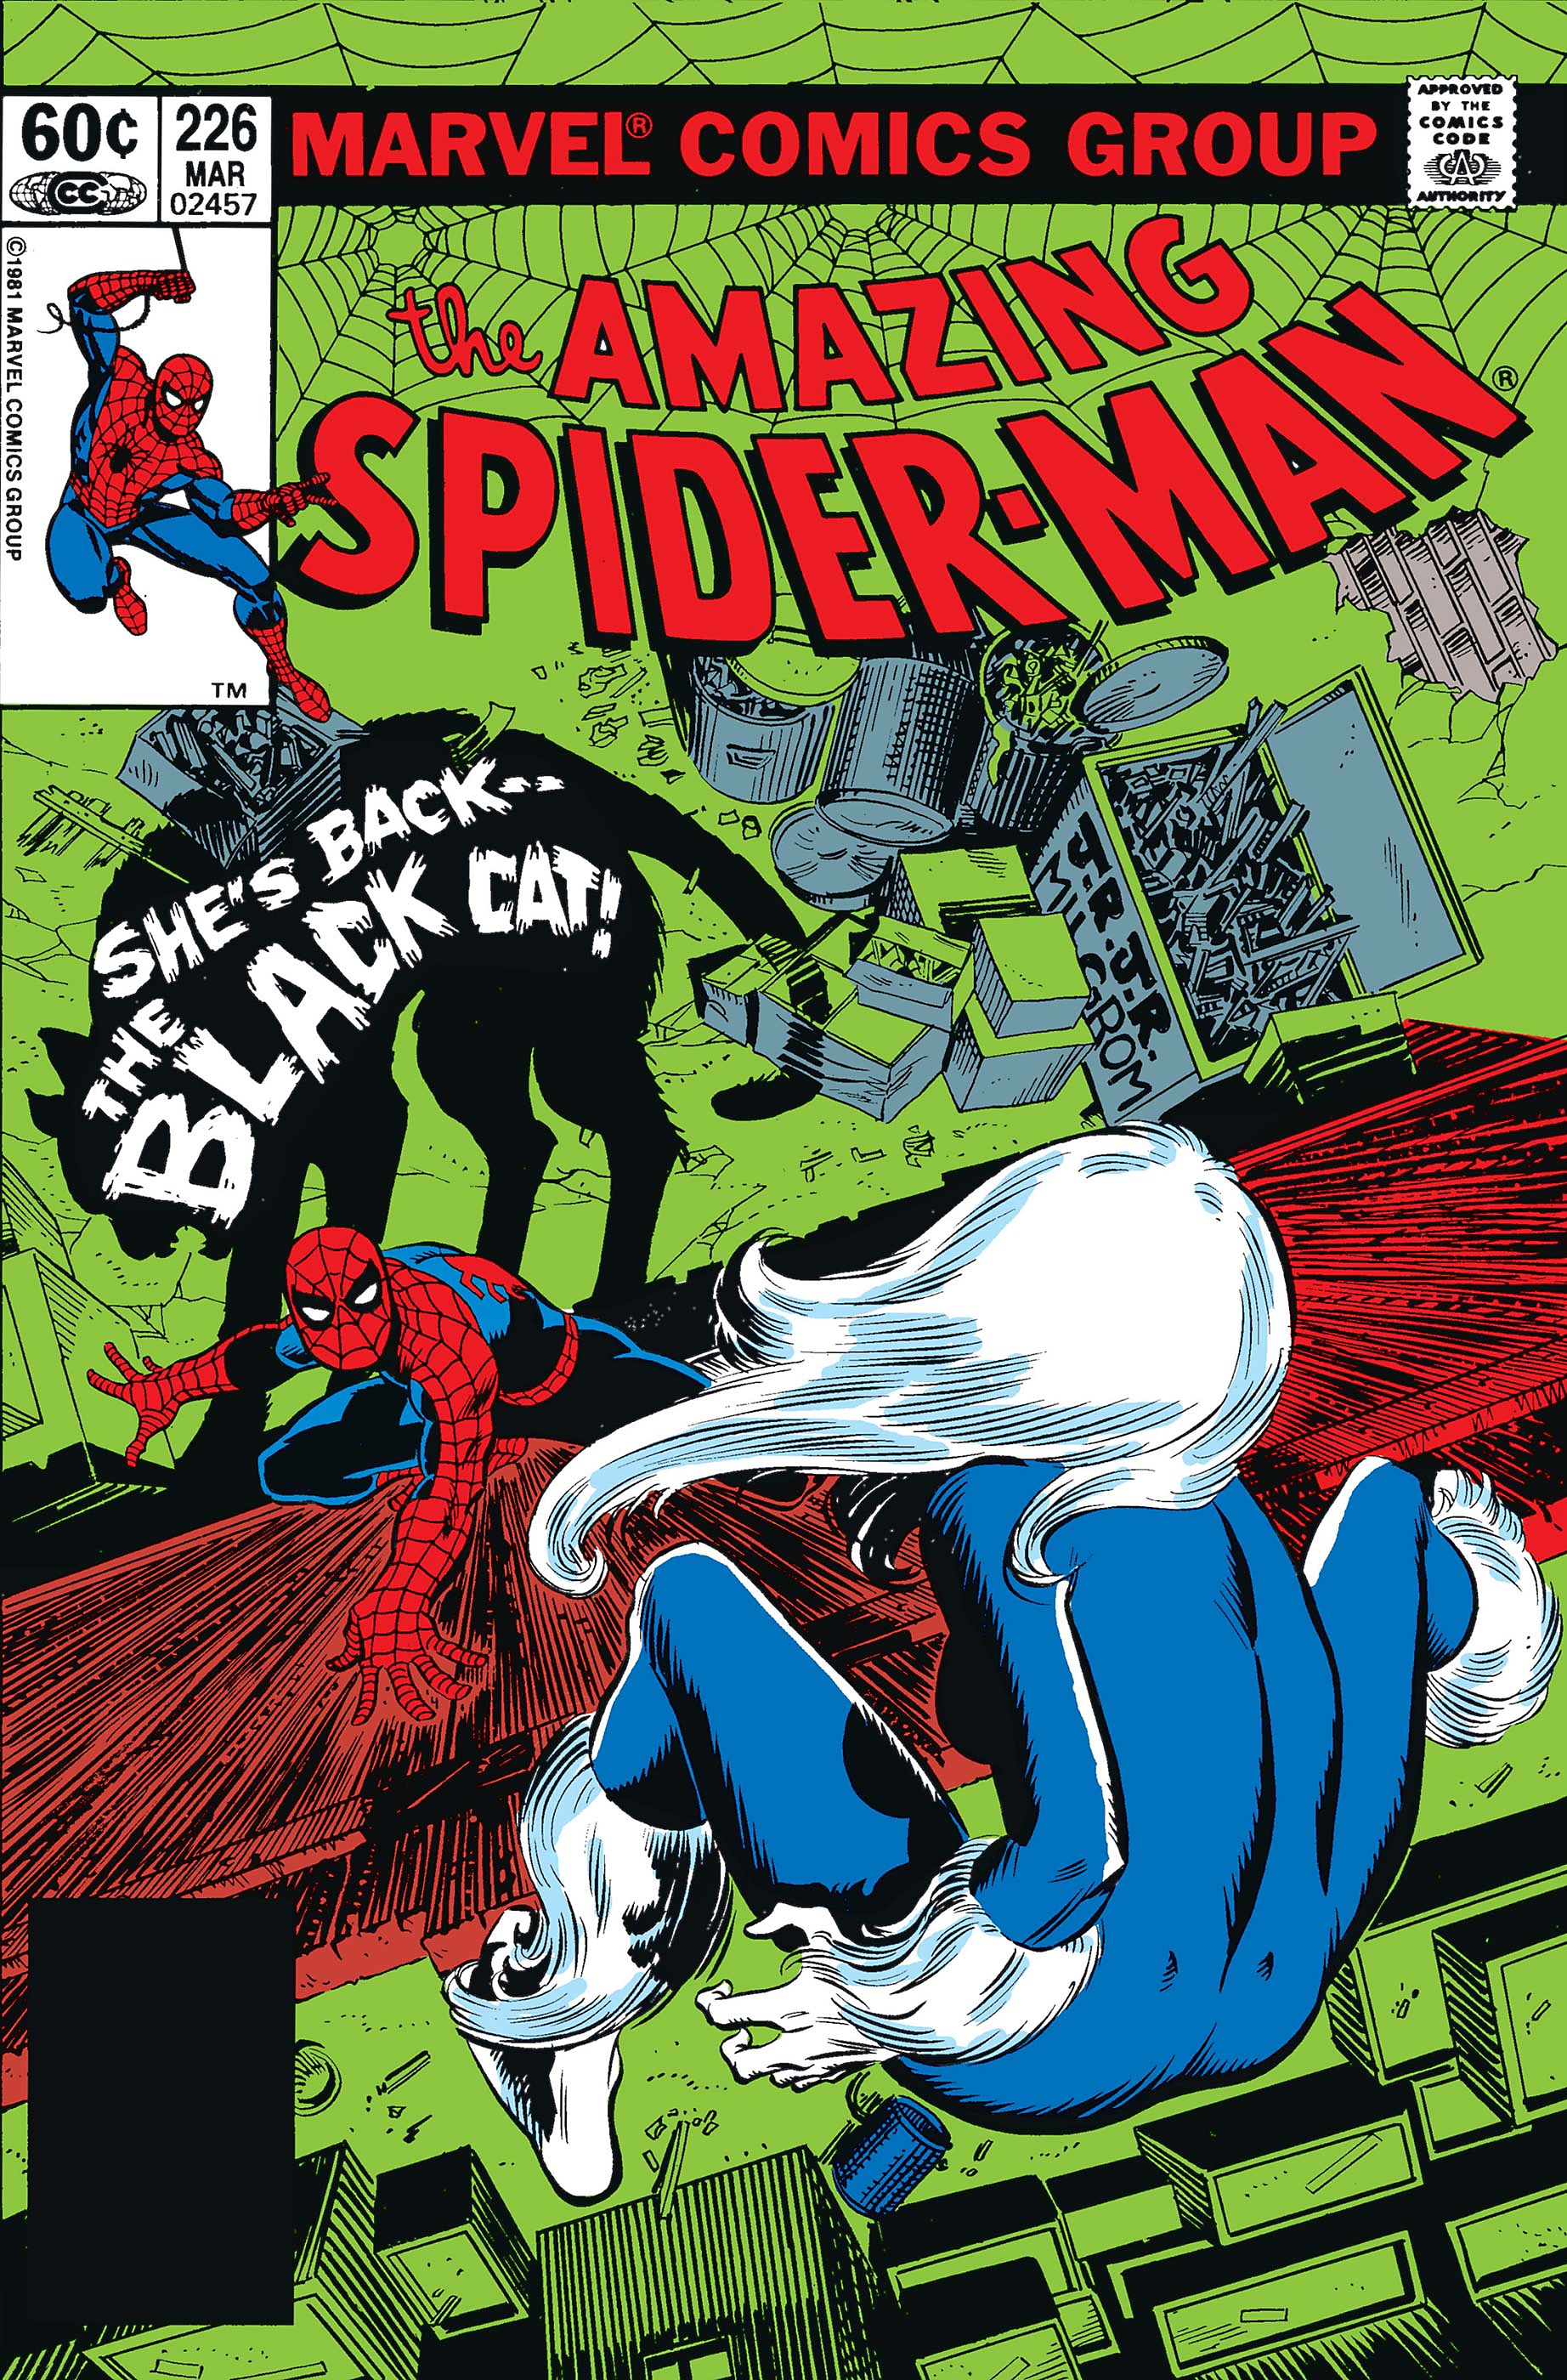 spider-man robo lista de lectura de cómics